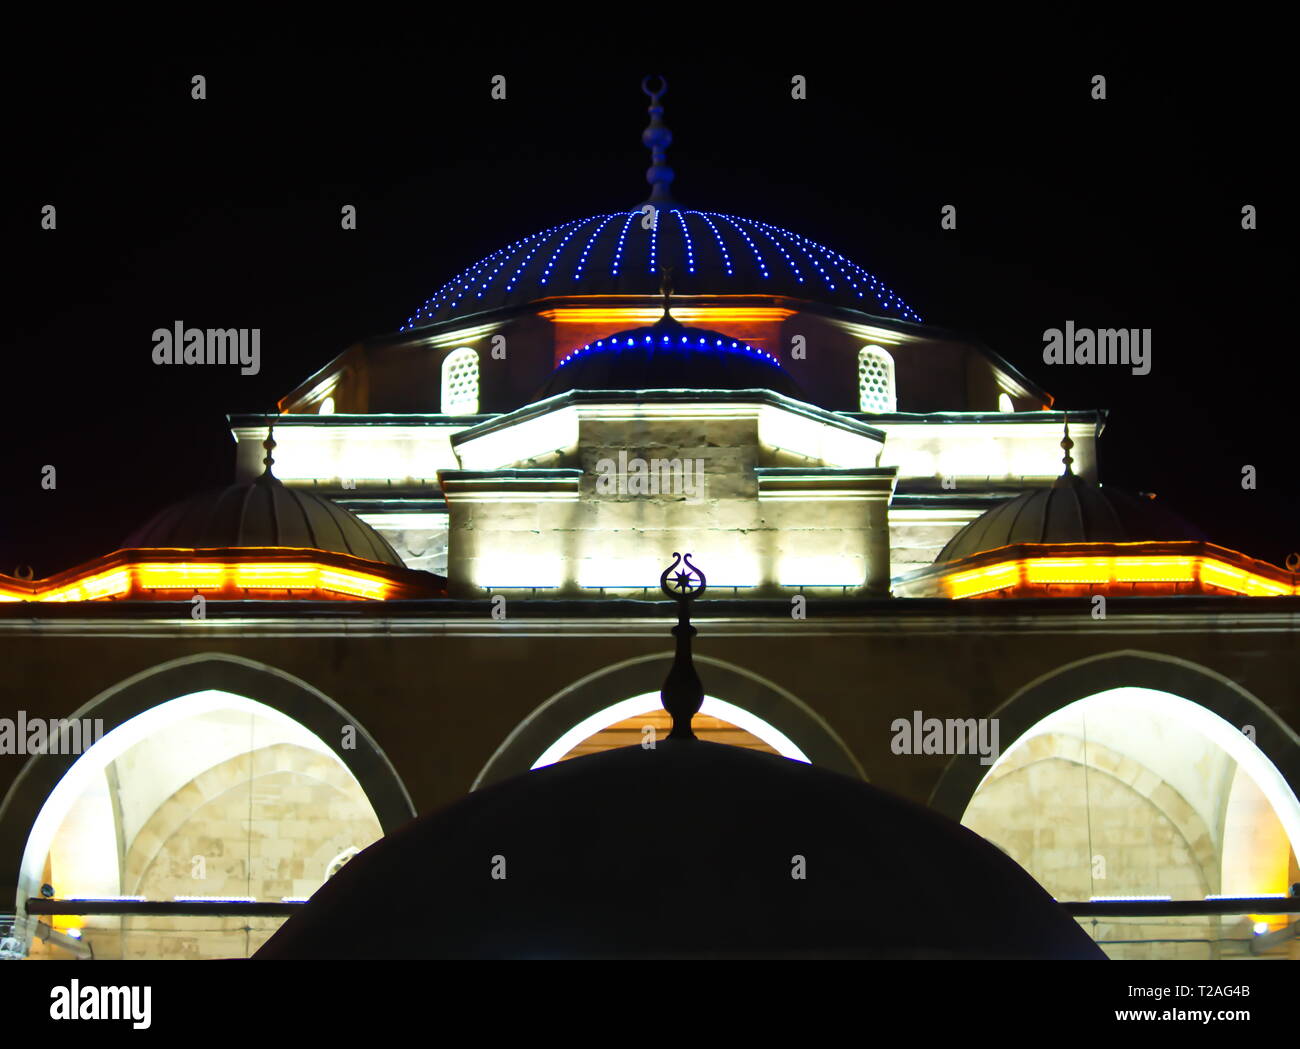 illuminated mosque at night. illuminated dome at night in the dark Stock Photo